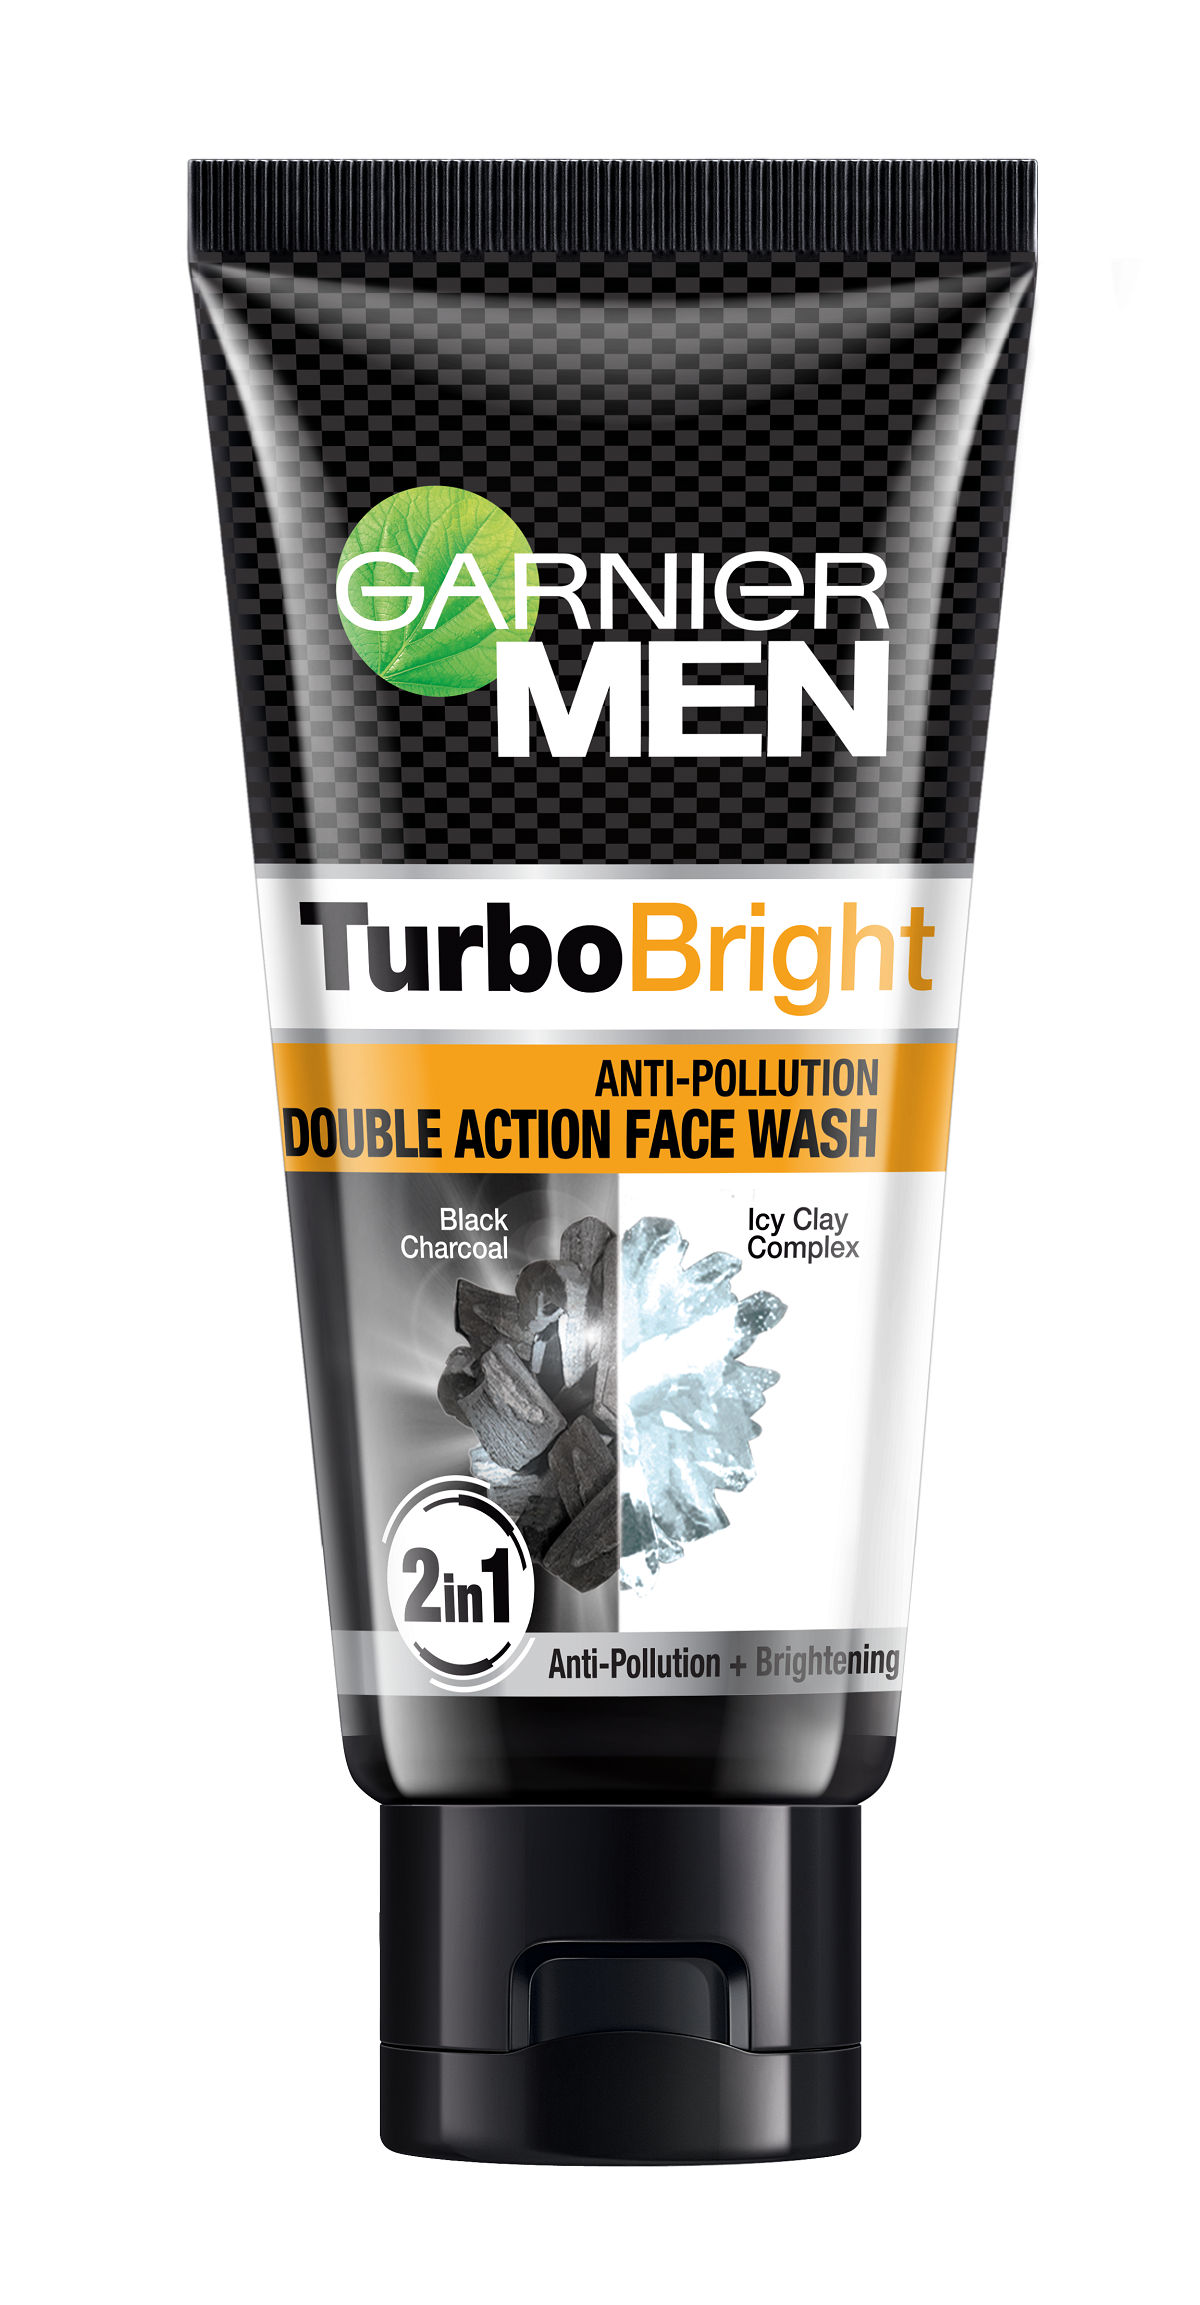 Garnier Men Turbo Bright Double Action Face Wash